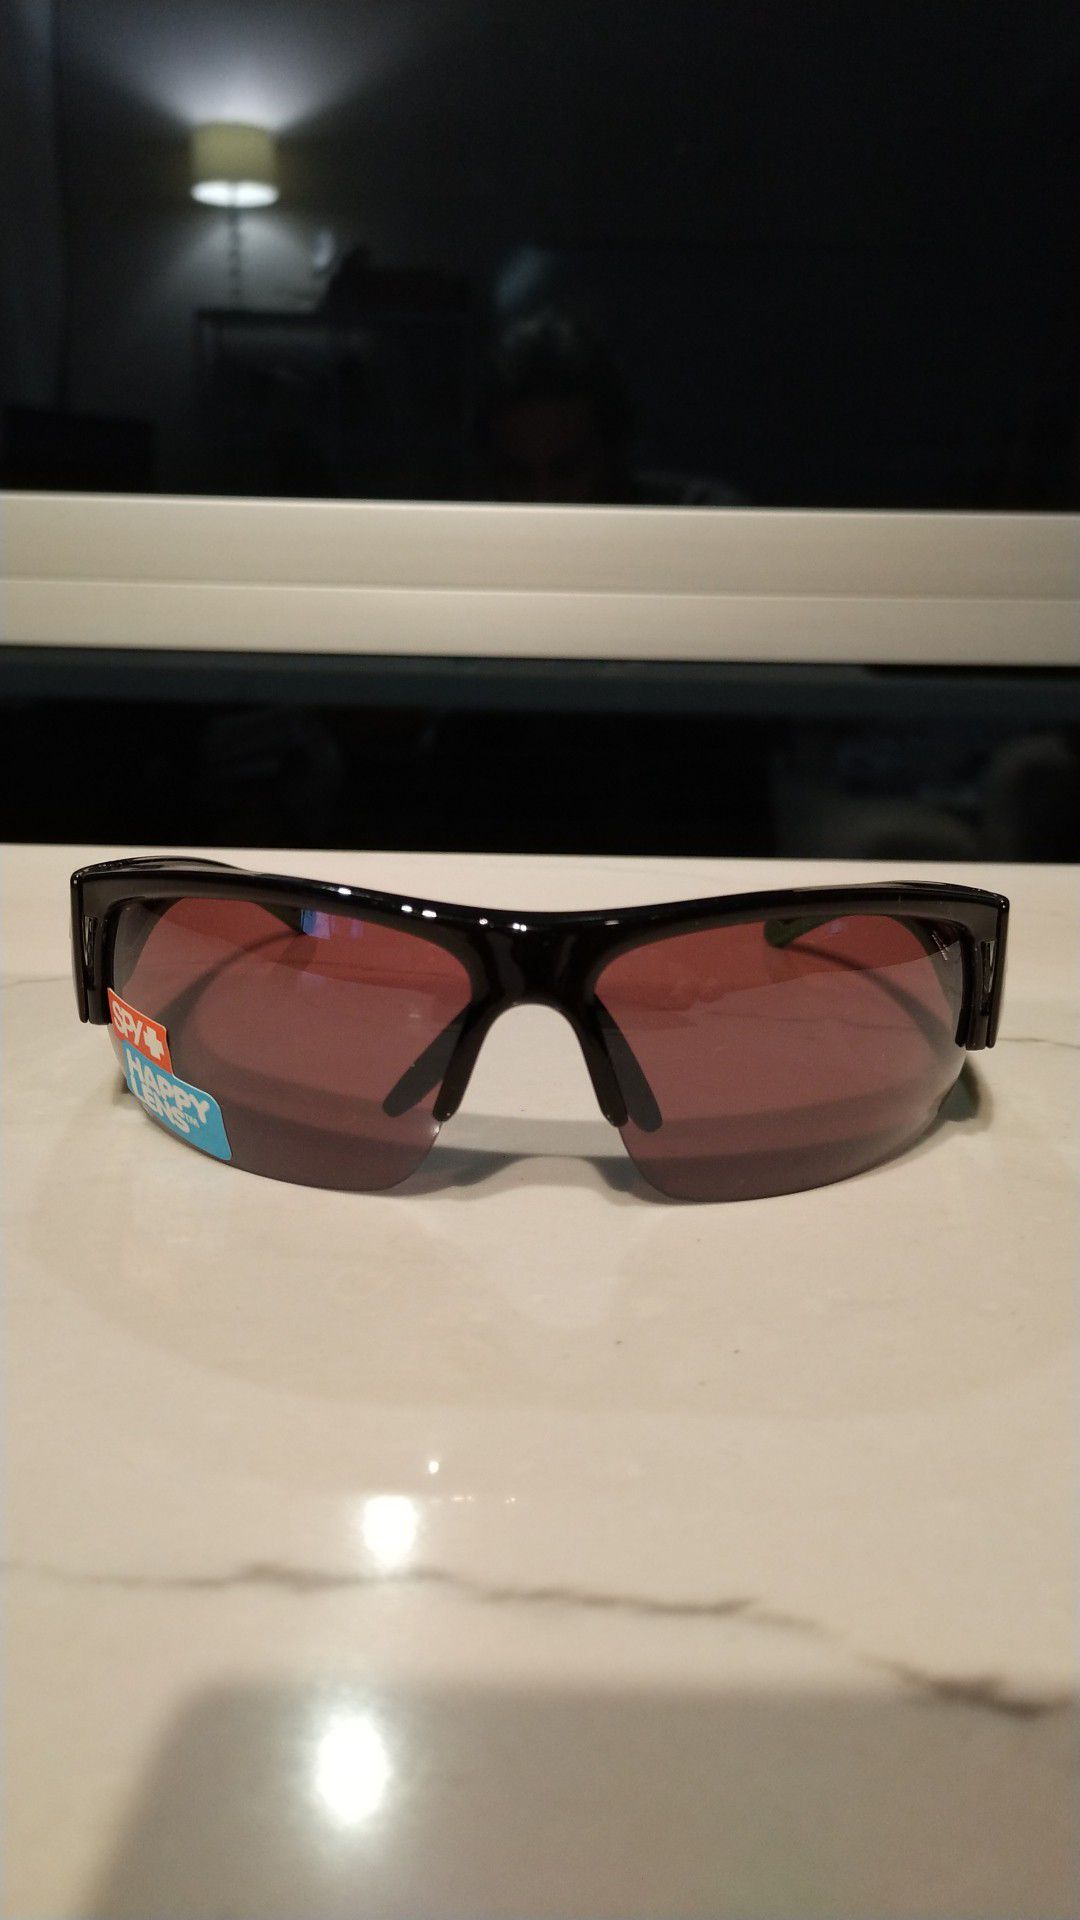 $75 on Amazon. New Spy Optic Flyer sunglasses